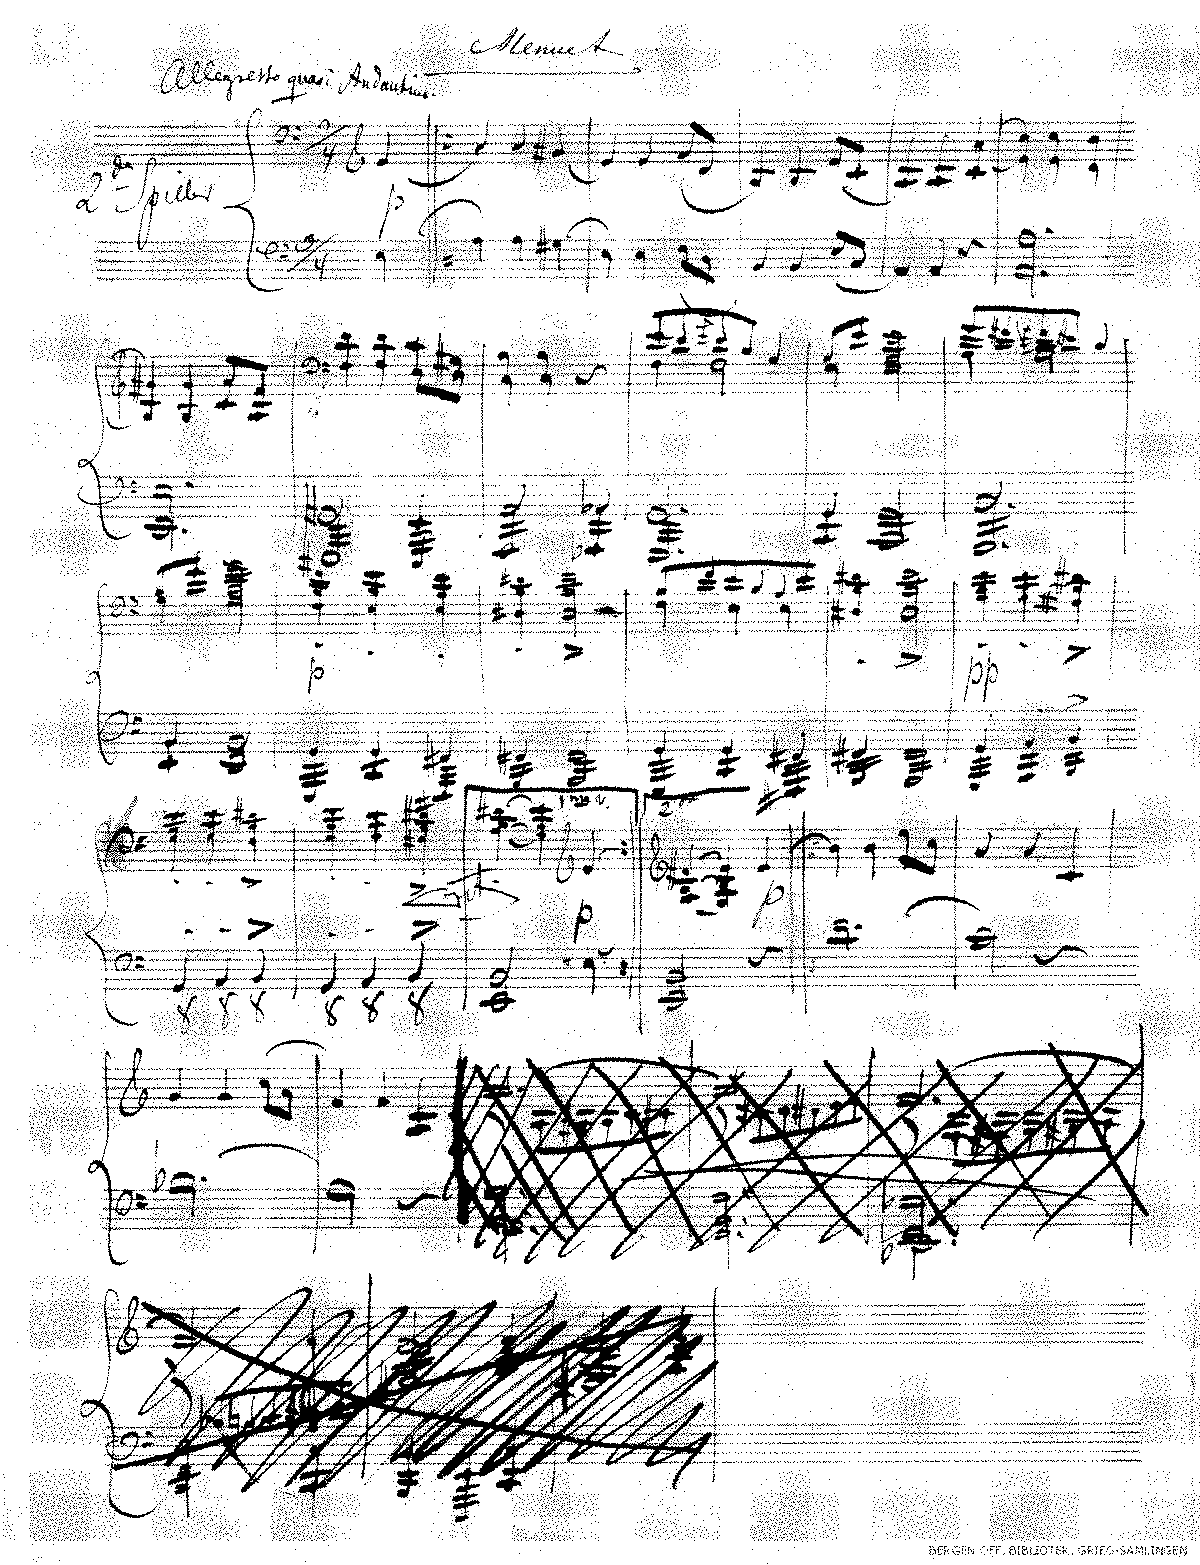 grieg violin sonata 3 program notes